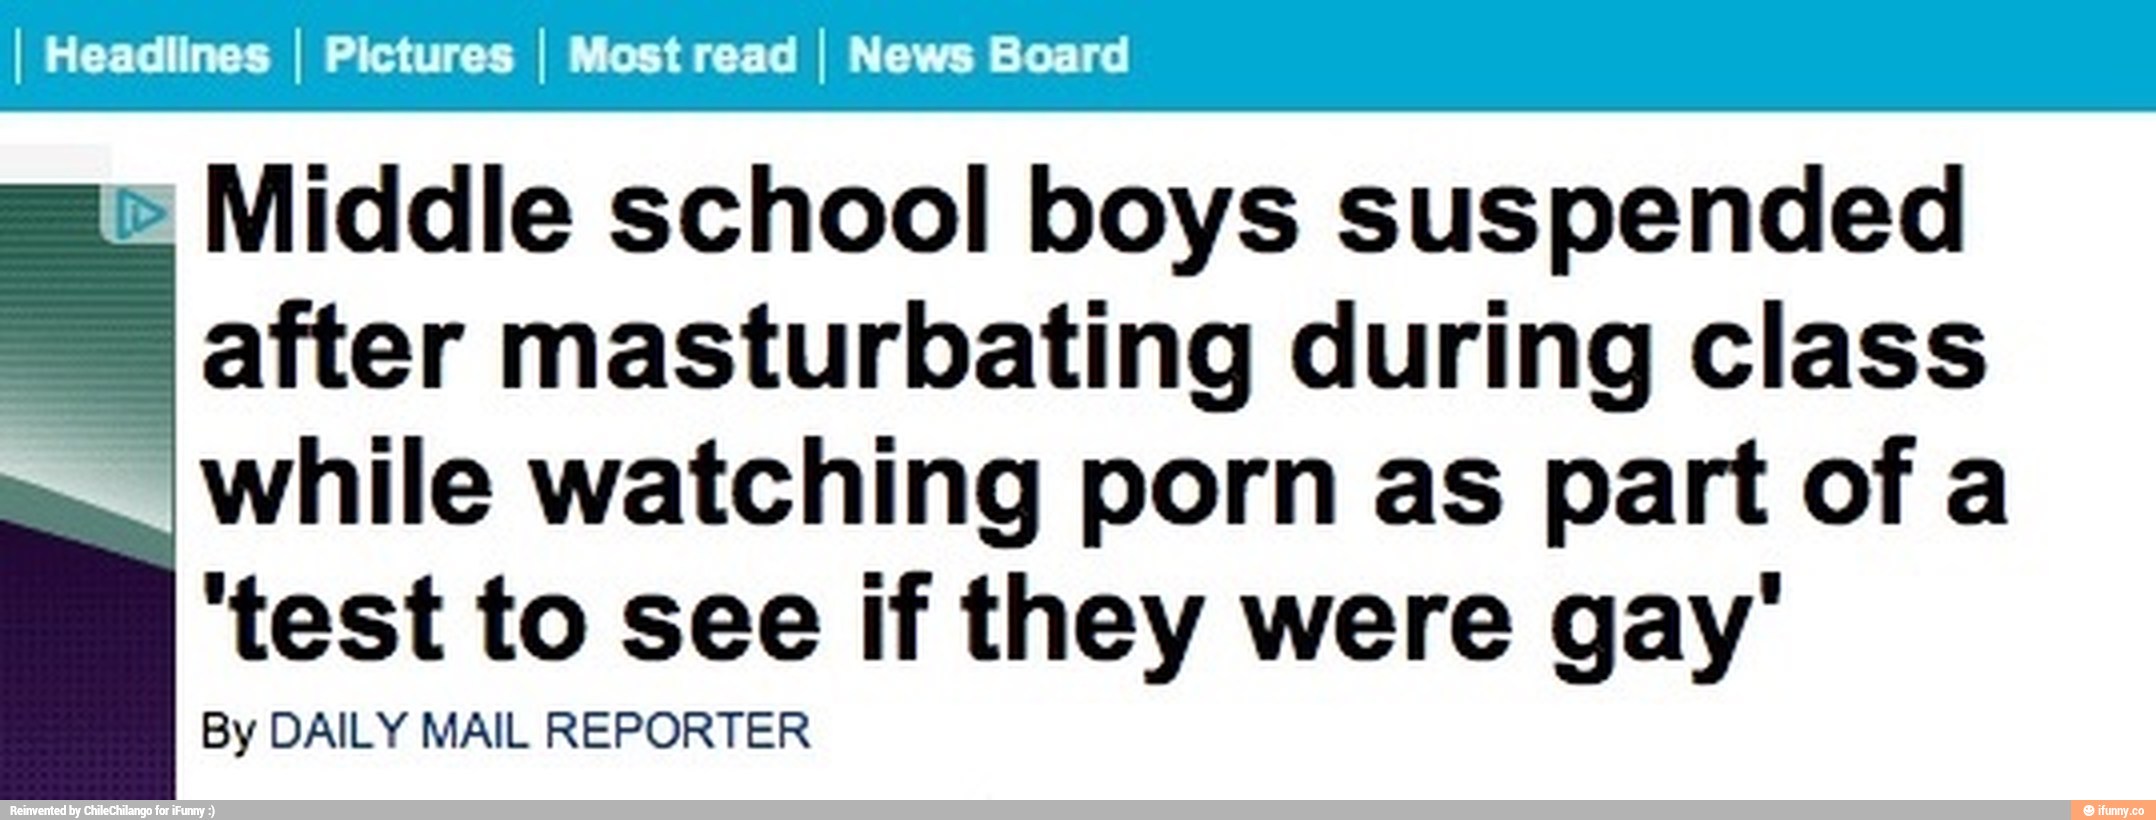 Masturbating during school